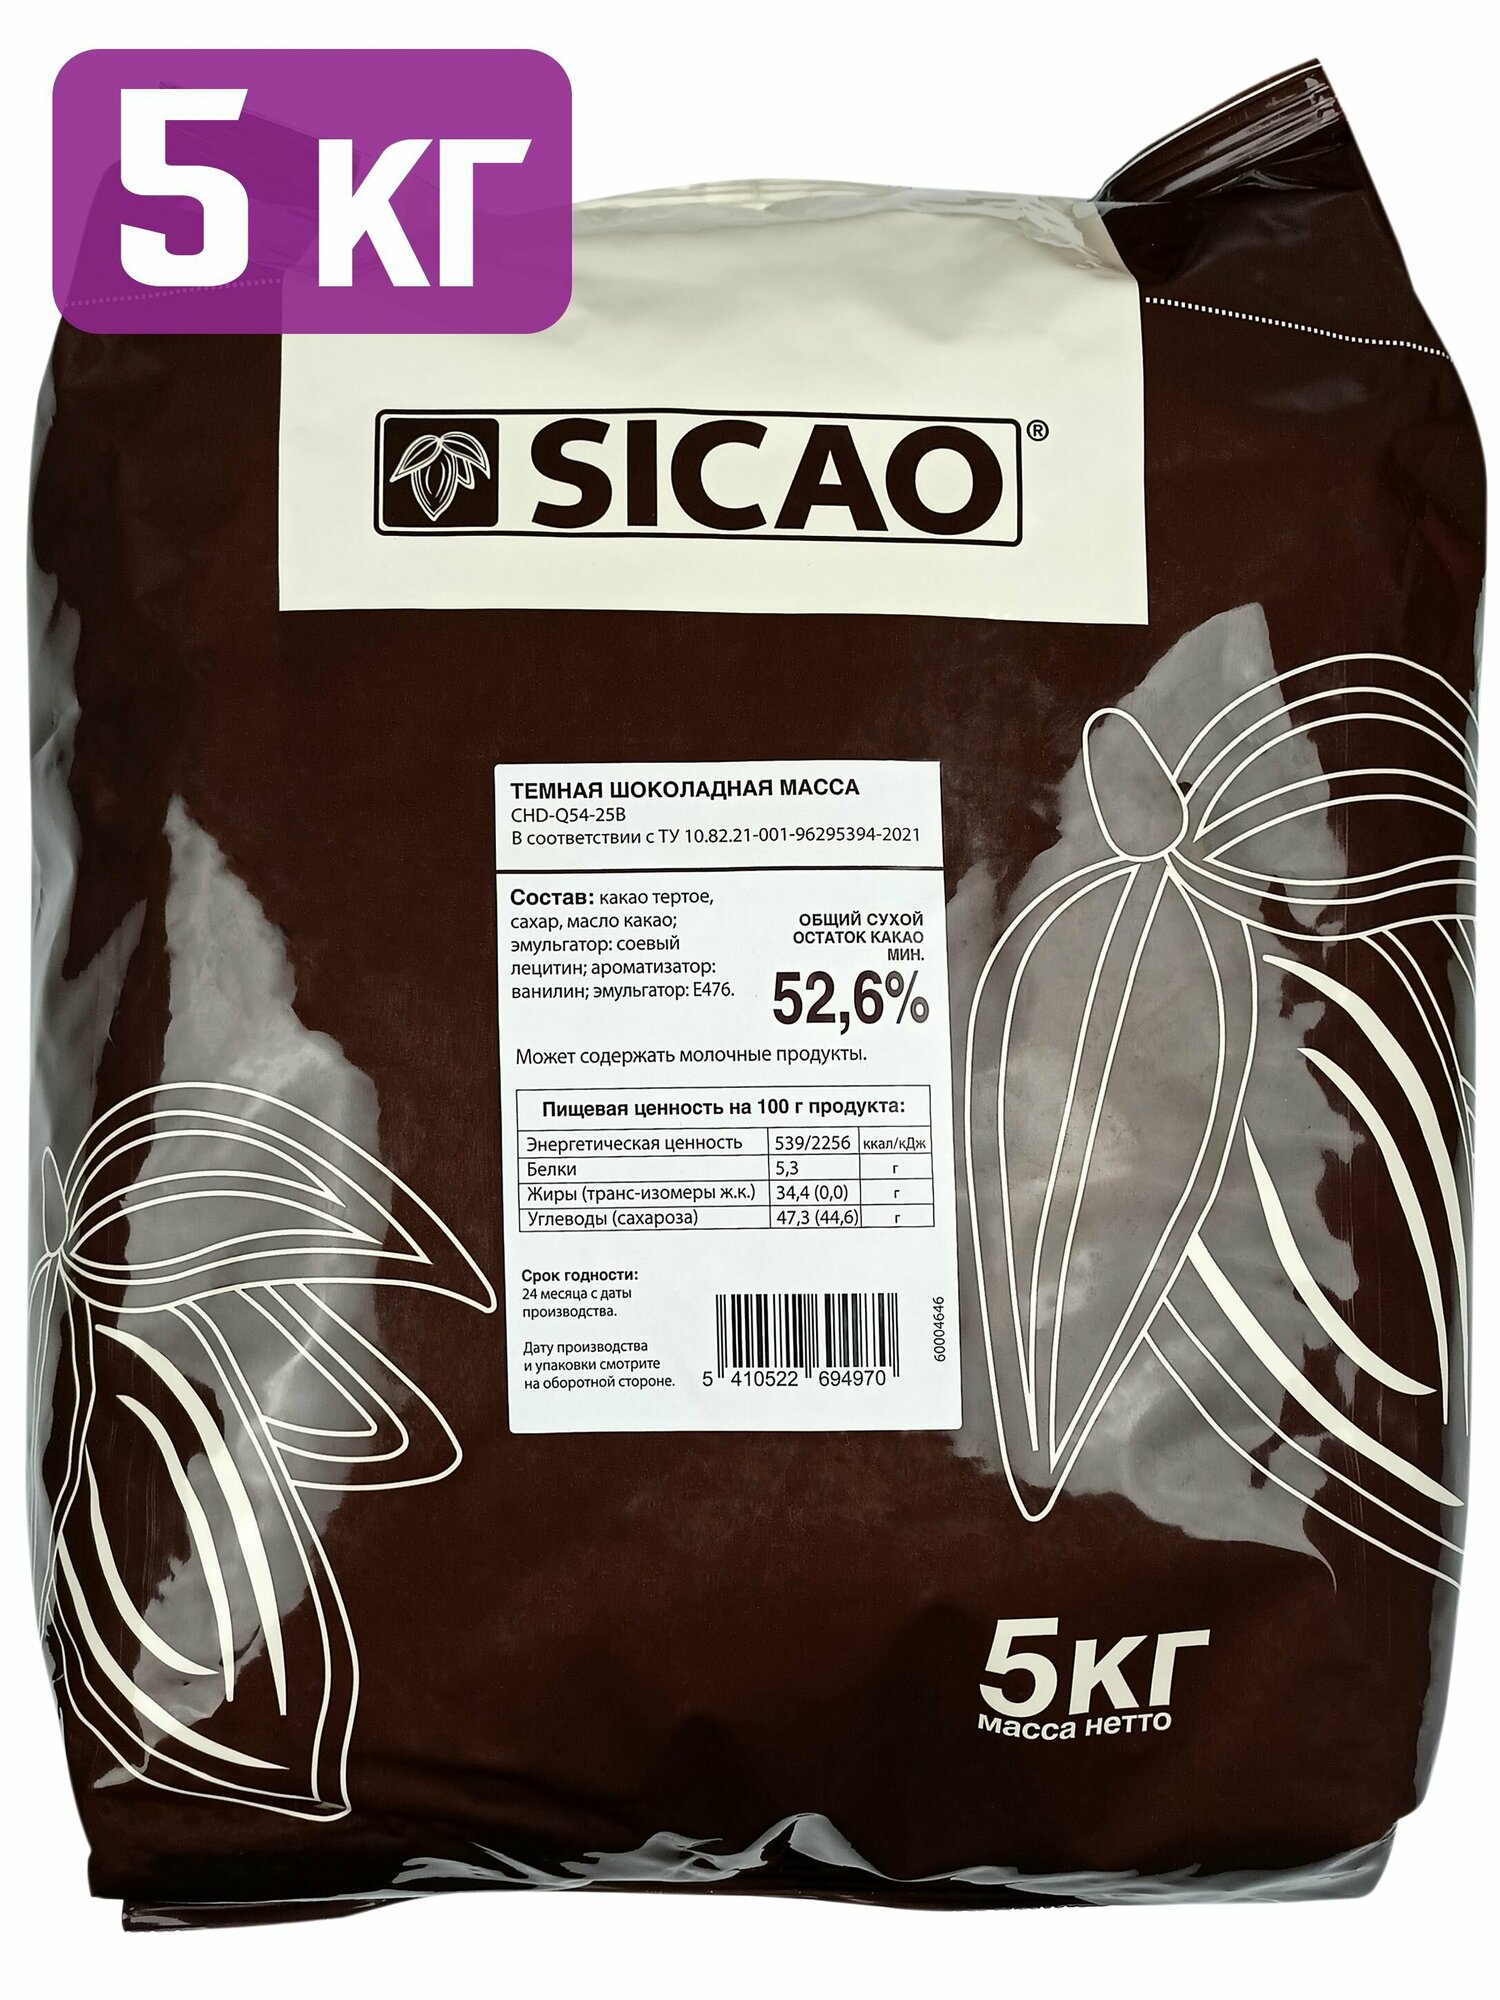 Sicao Темный шоколад 52,6% дропсы, каллеты, 5 кг, CHD-Q54-25B